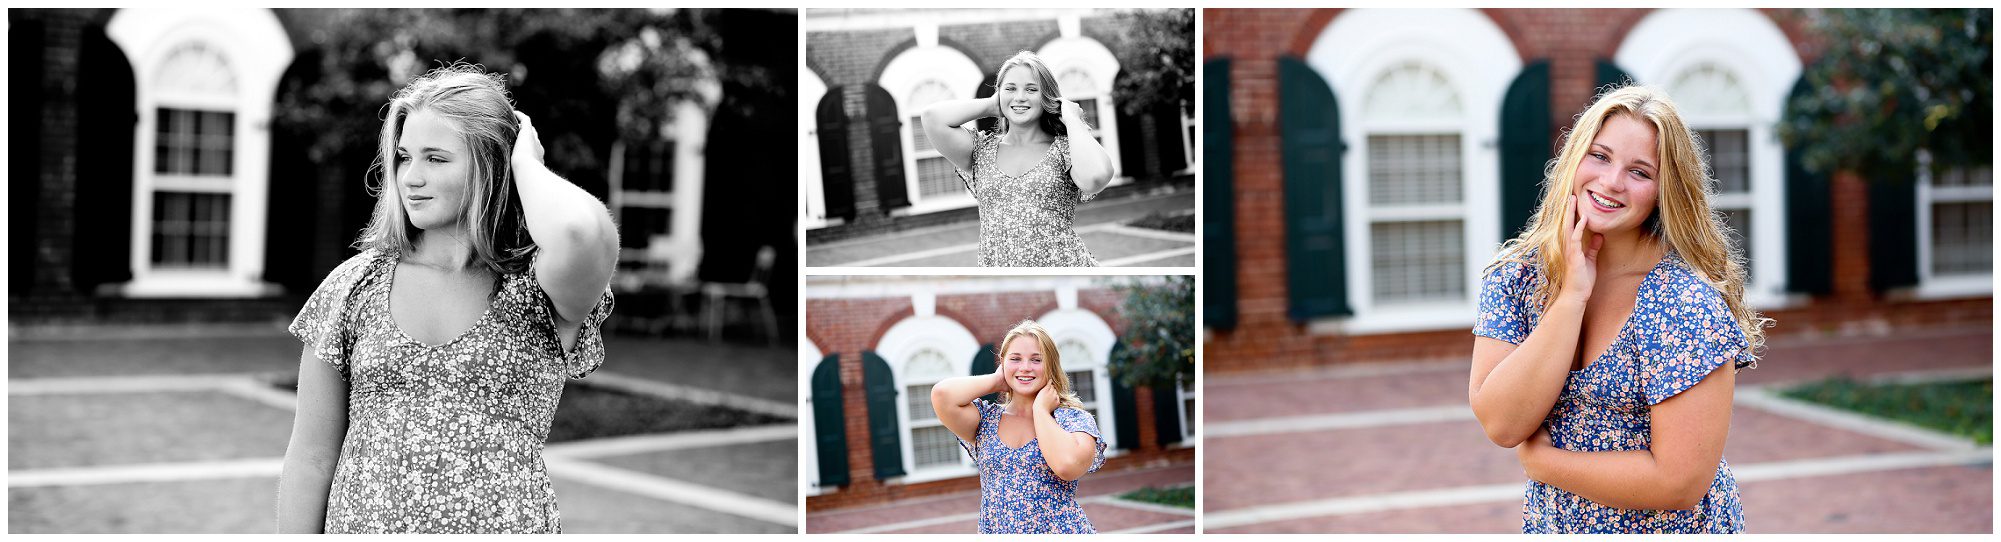 Fluvanna Teen Girl Summer Birthday Portraits in Charlottesville Photographer pictures session photoshoot cville photography Virginia 